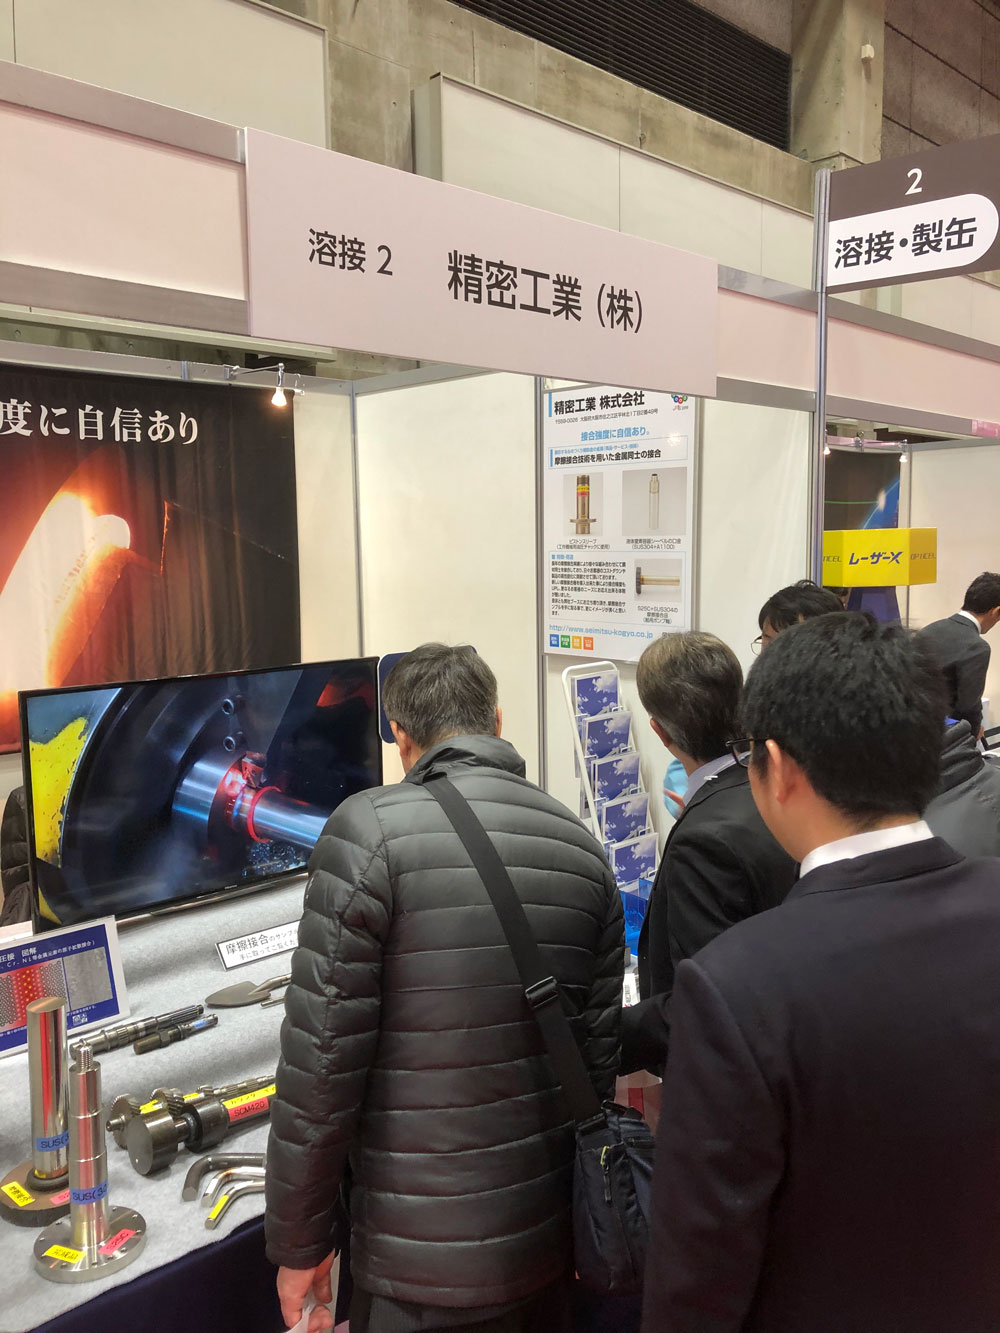 Promotion at ' Okayama Technology Exhibition '